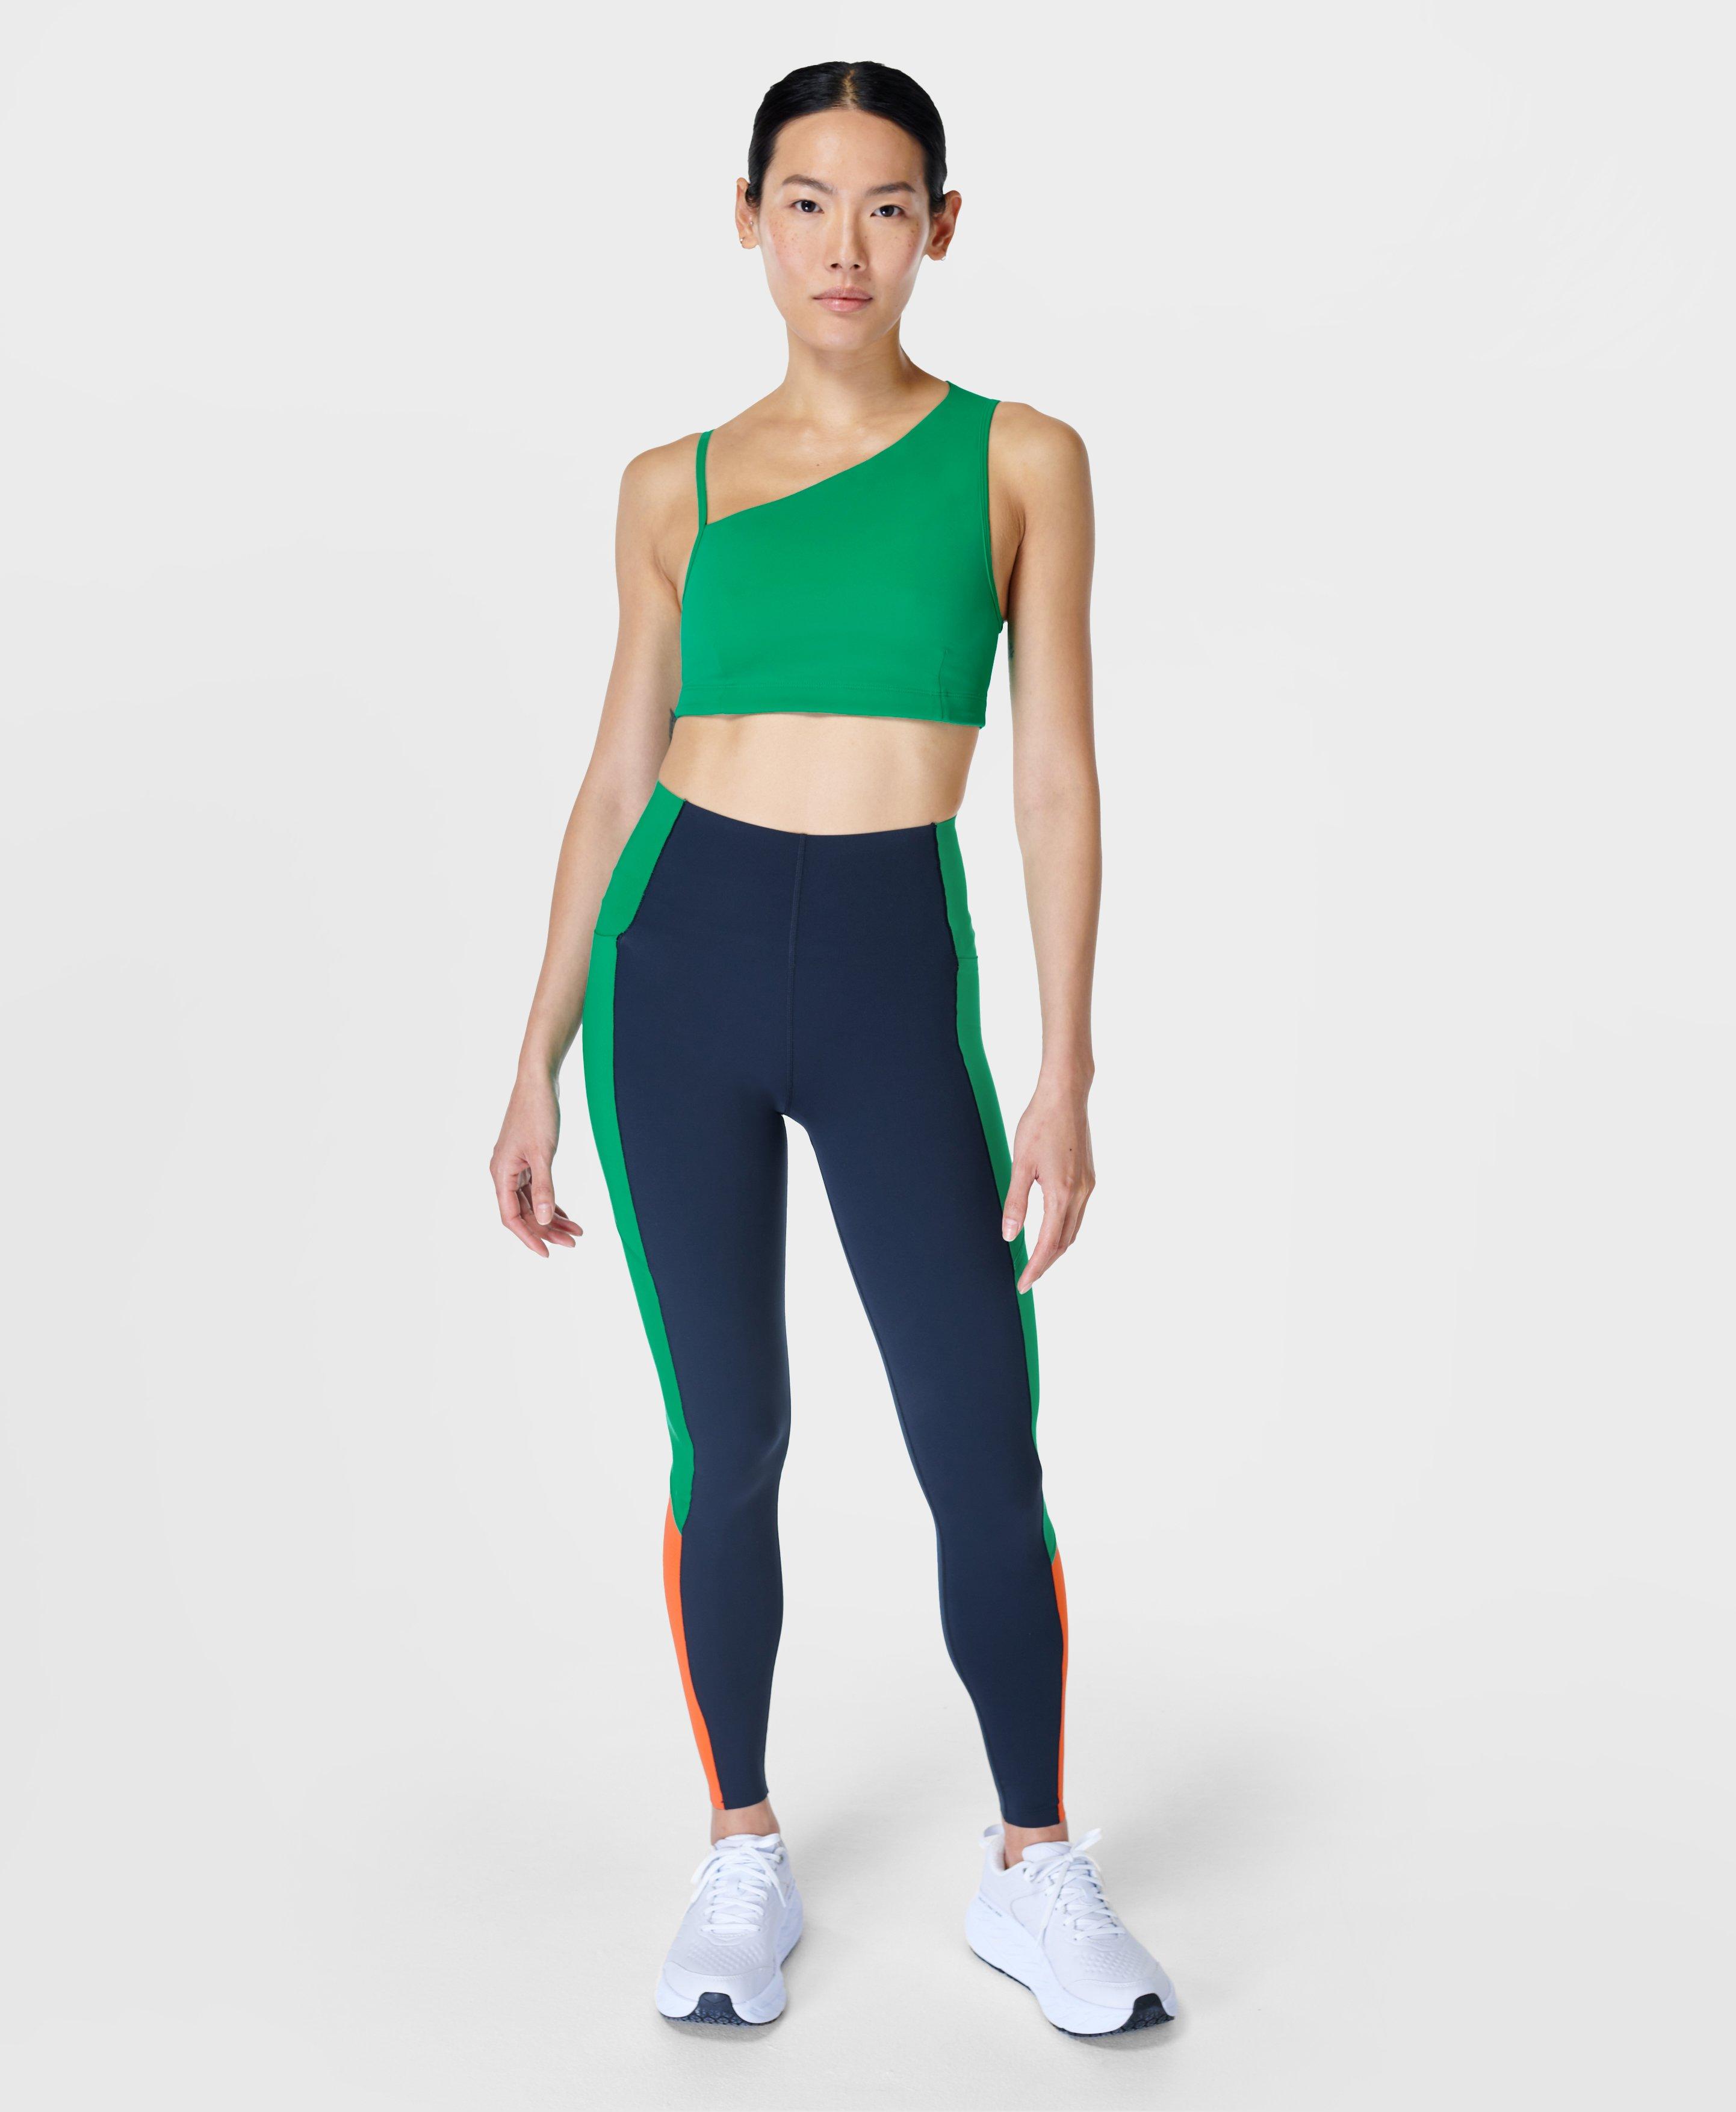 $65 Sweaty Betty Shanti Yoga Bra Top Size S Small Green padded nwt